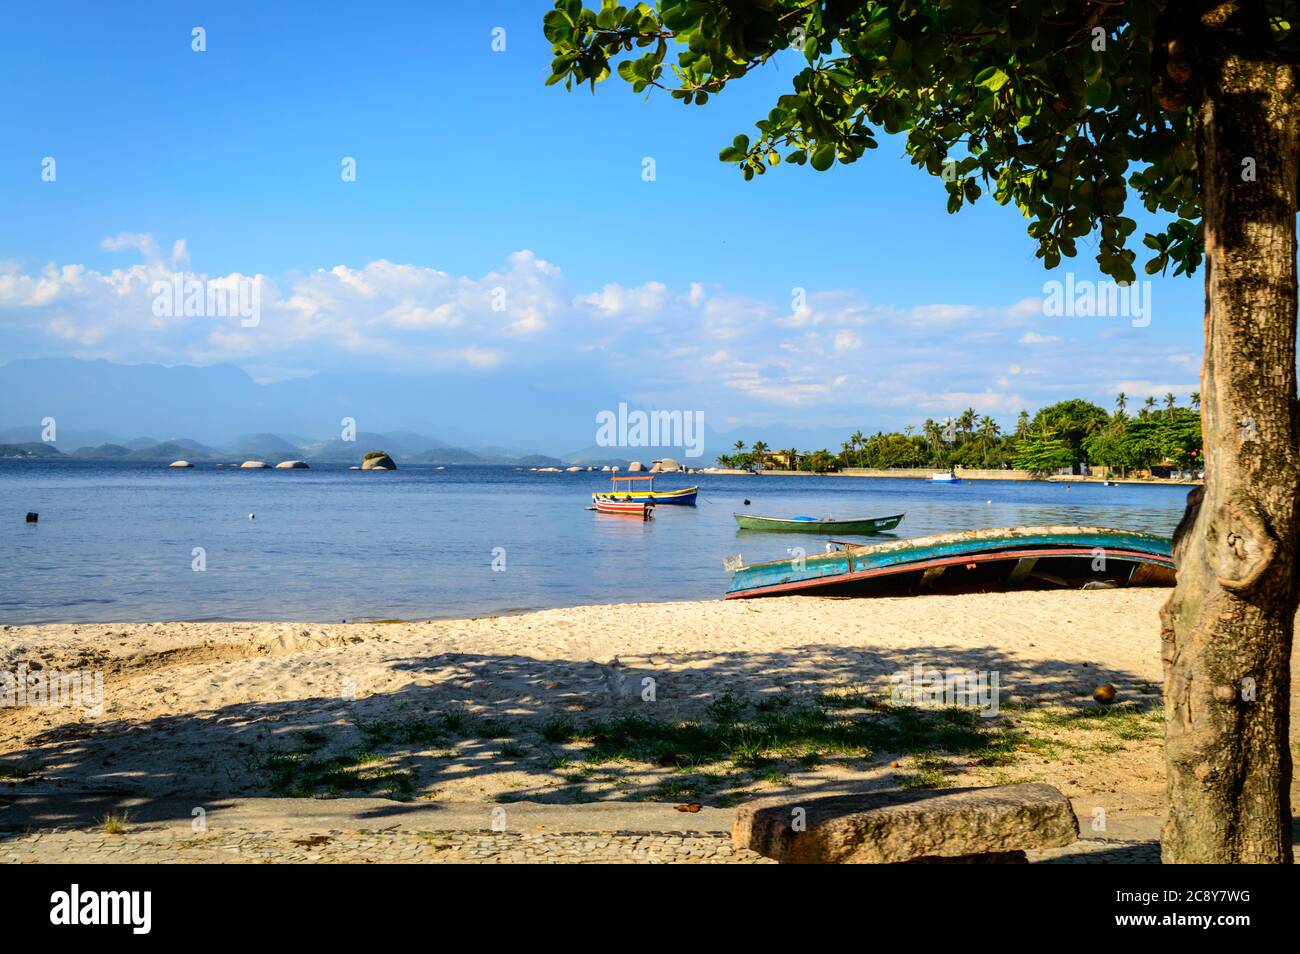 Tranquil beach sene with colorful wood boats, sand, shade, tree, calm water at Paquetá Island, Rio de Janeiro, Brazil. Stock Photo